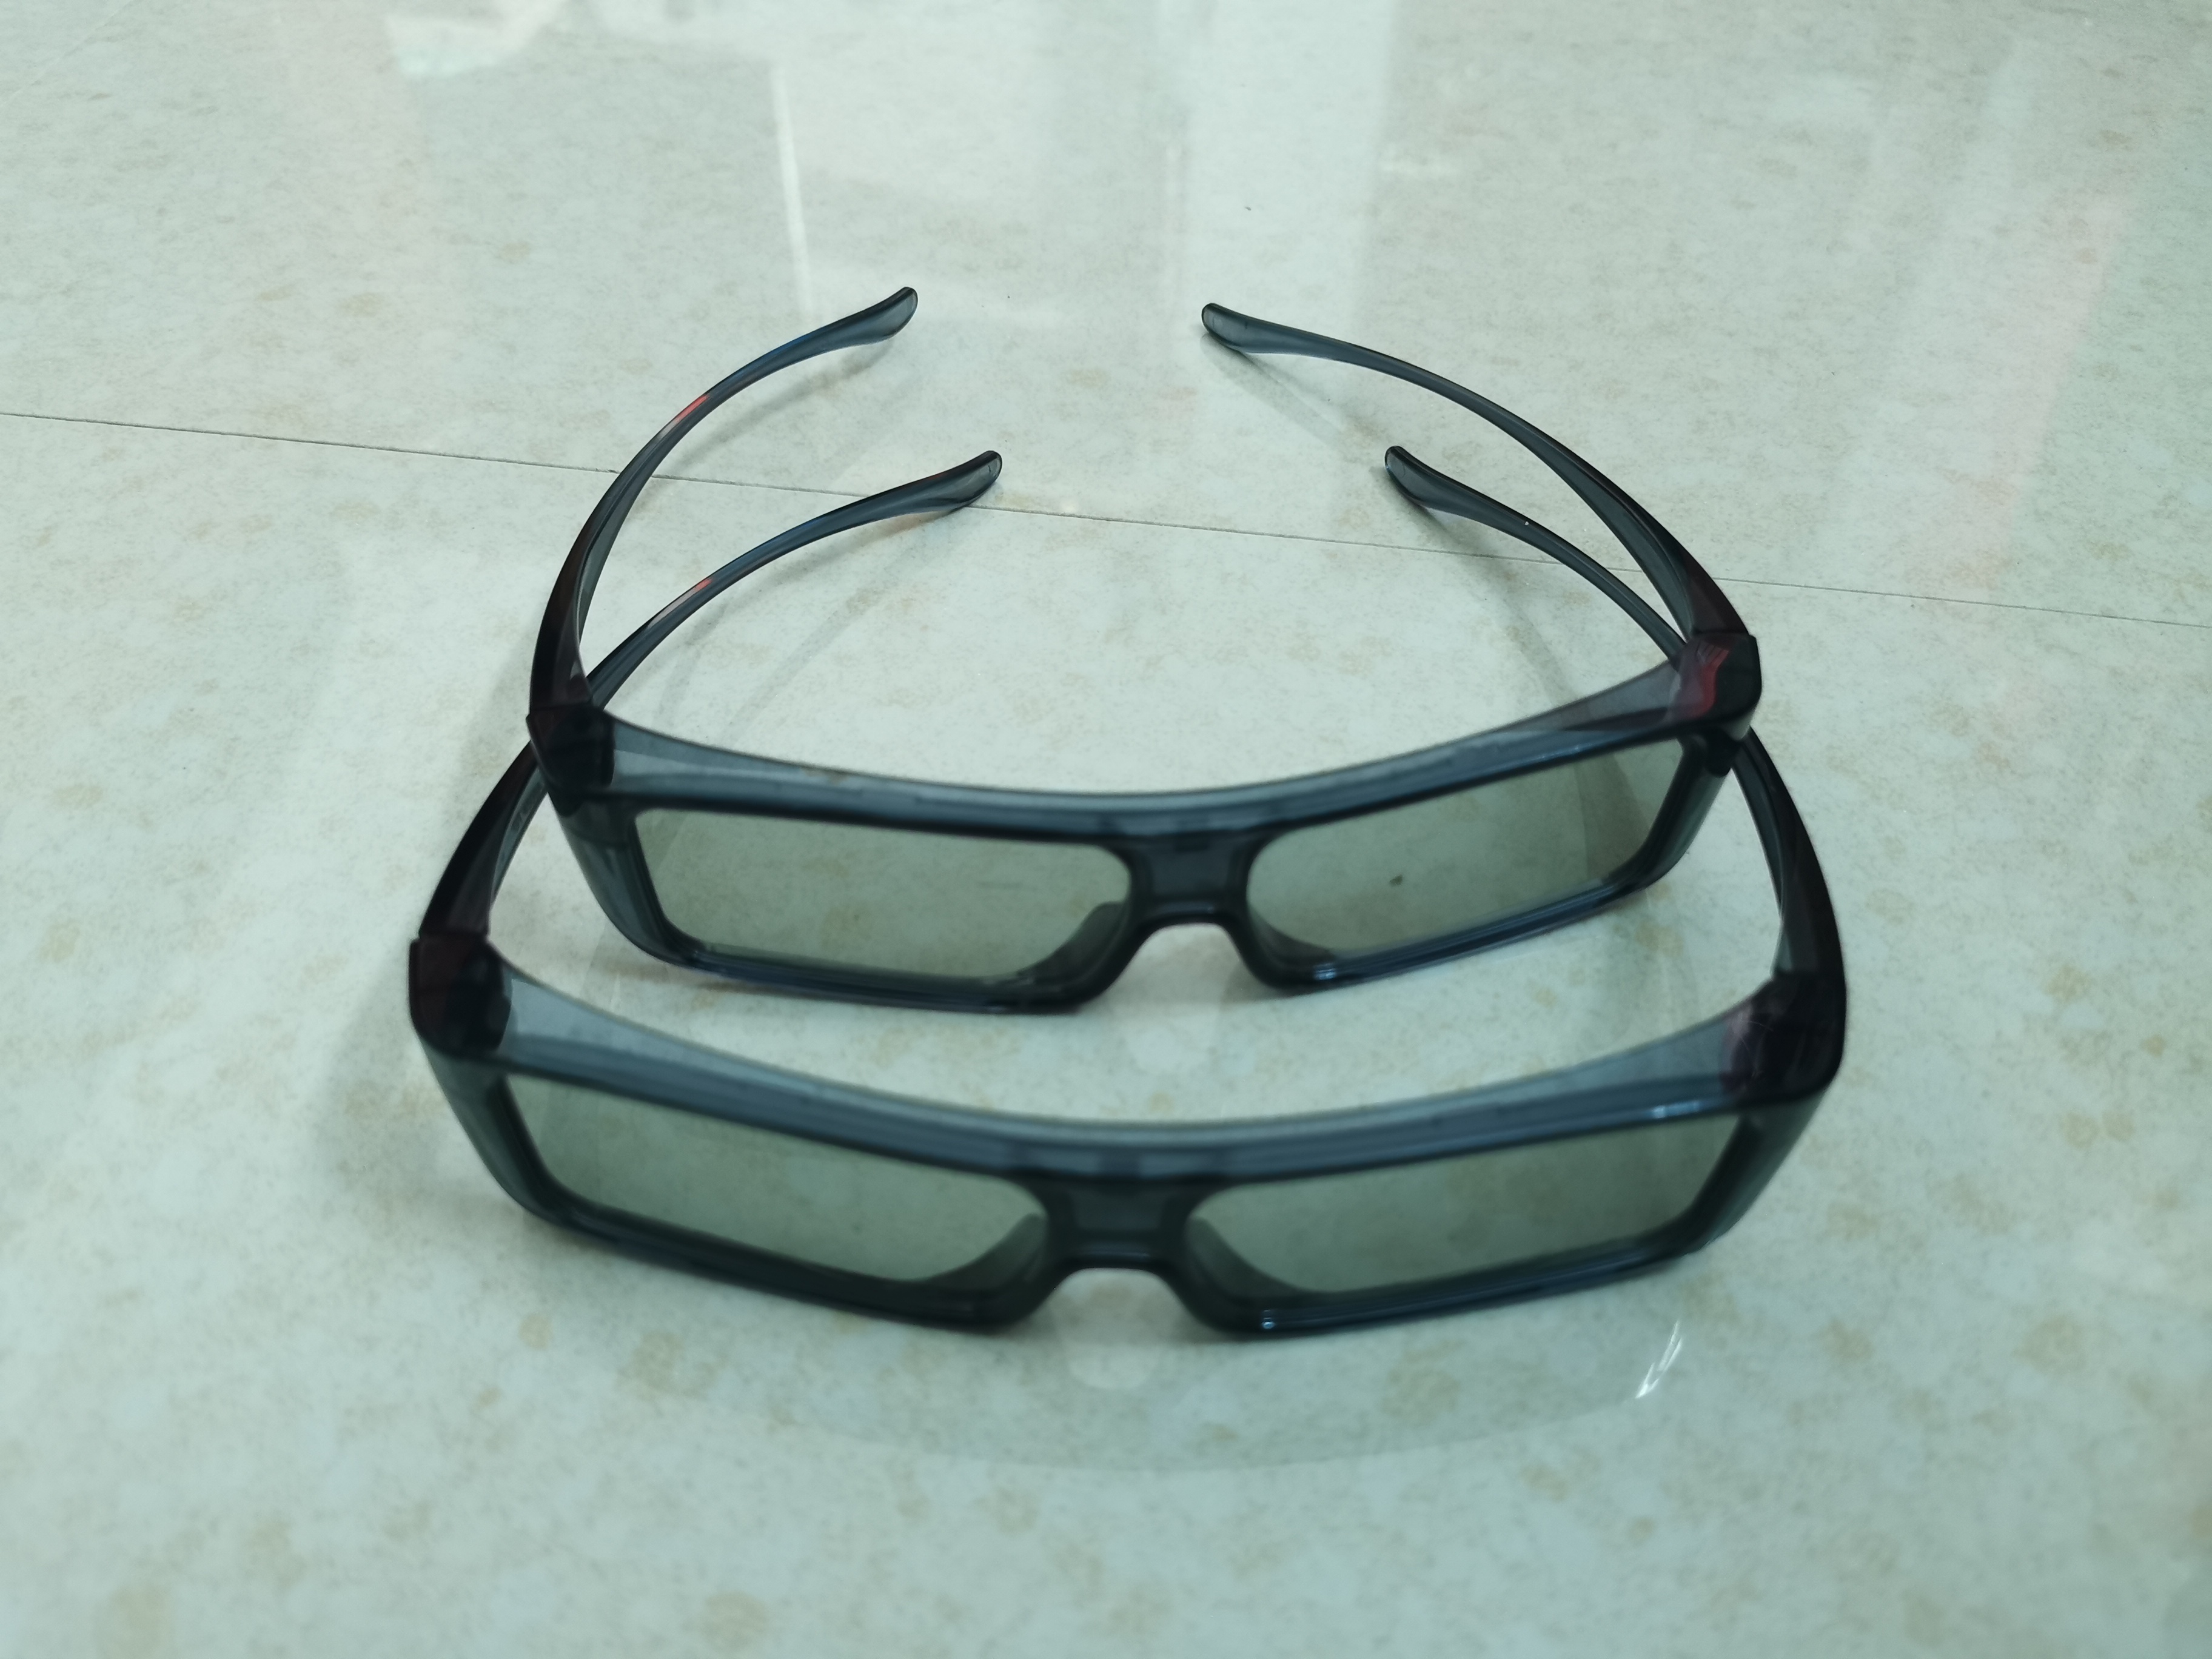 Panasonic TY-EP3D20 Passive 3D แว่น 3 D แว่น 3 มิติ Panasonic 3D Passsive Glasses ขายแว่นตา3มิติ ขายแว่น 3D แว่น3มิติ สำหรับดูทีวี3มิติ แว่น 3D สำหรับดูทีวี 3D